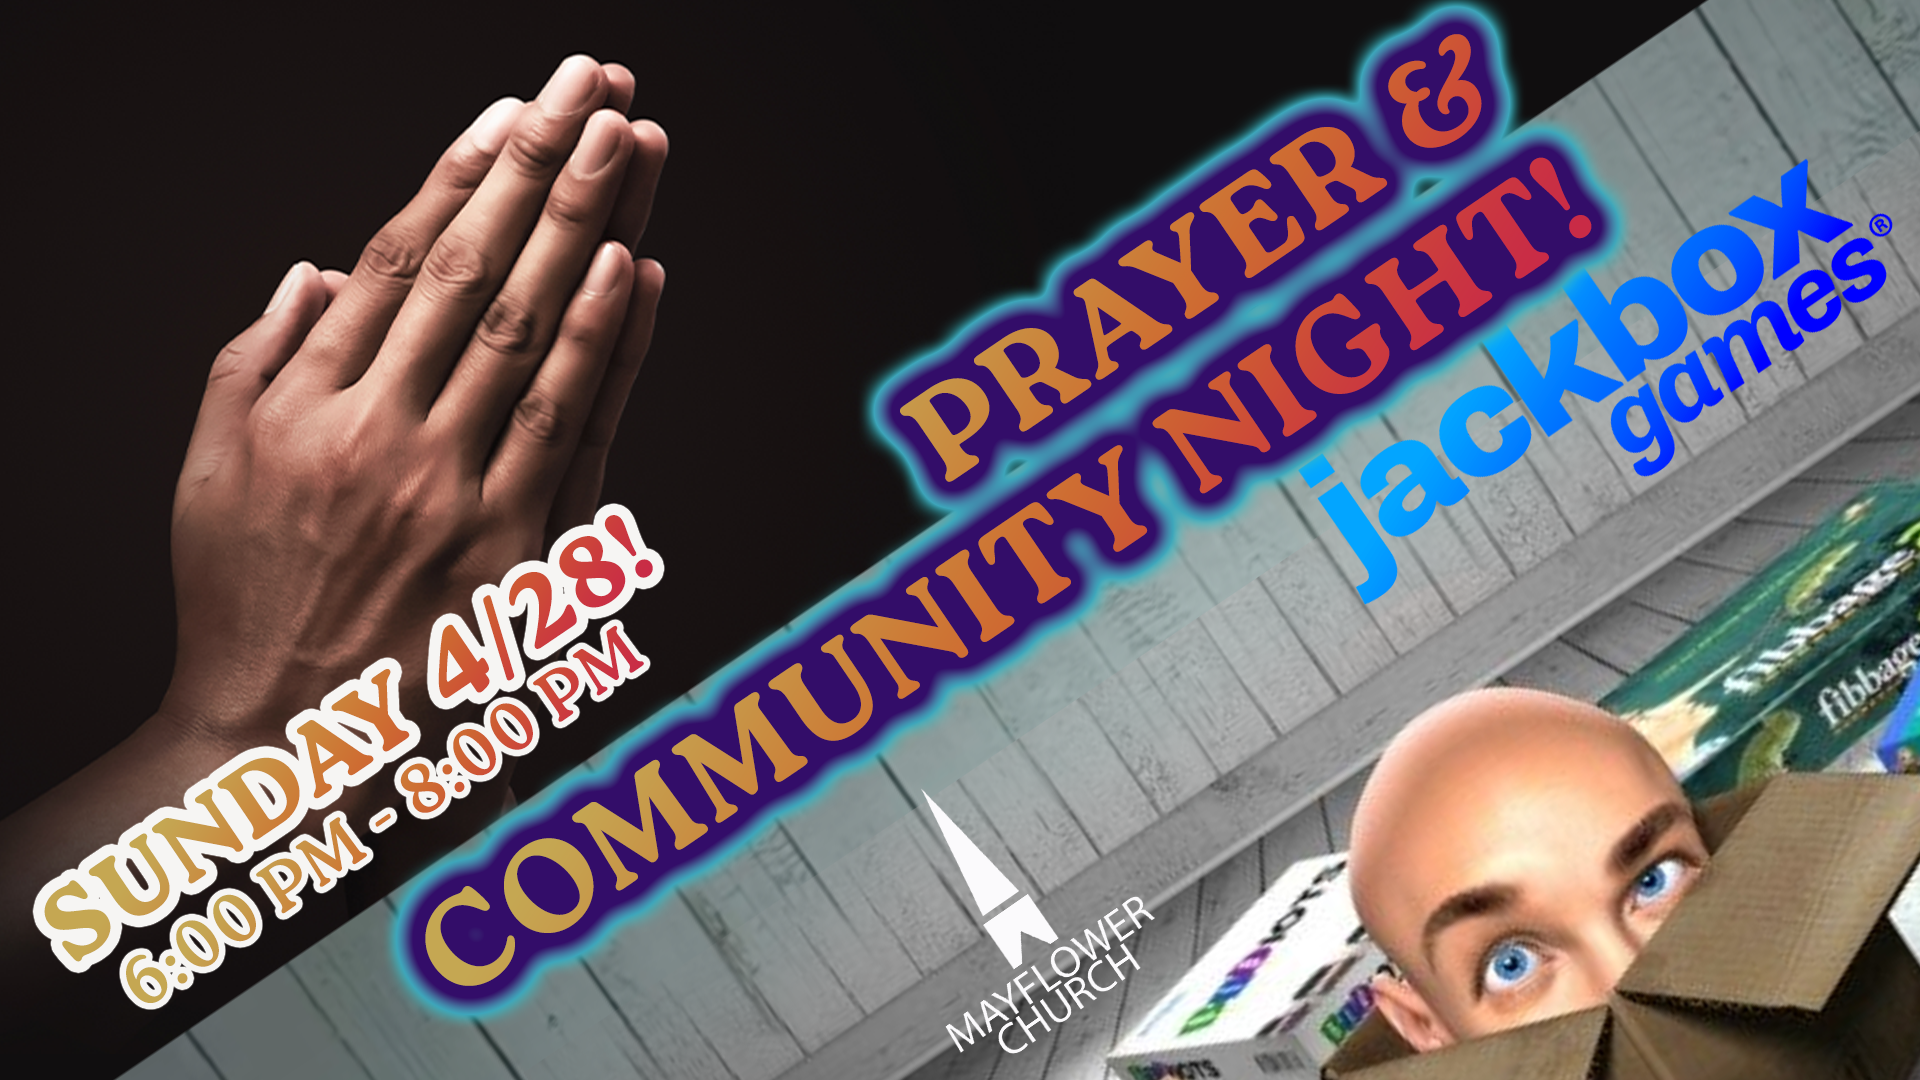 Prayer and Community Night